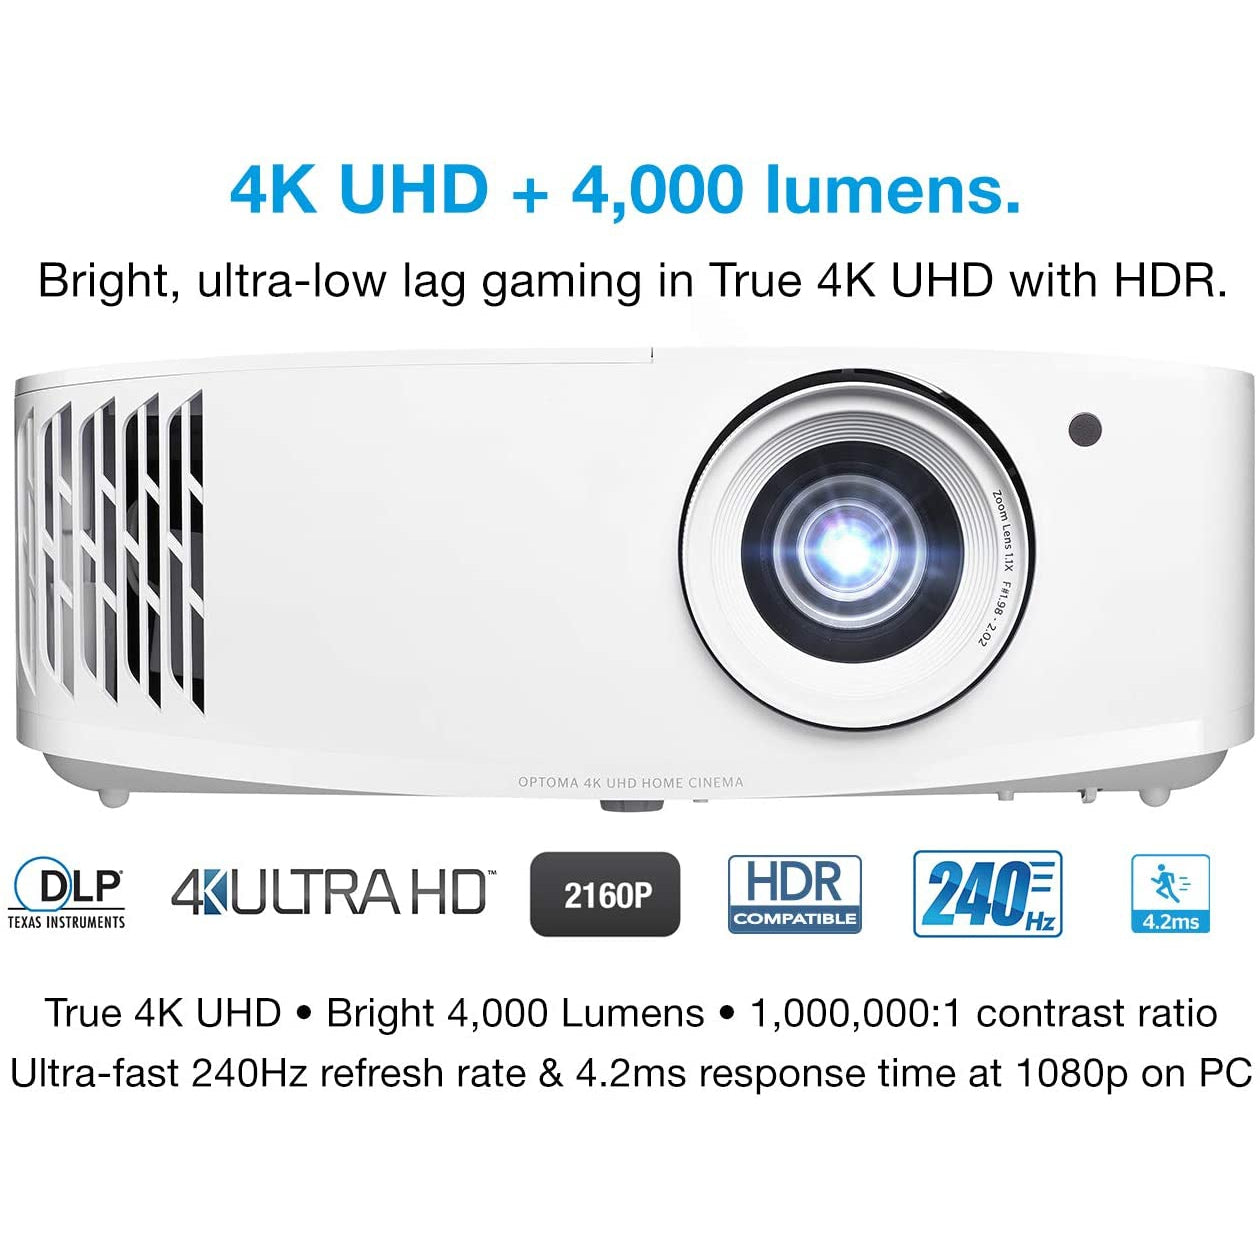 Optoma UHD38 4K Home Cinema Projector - White